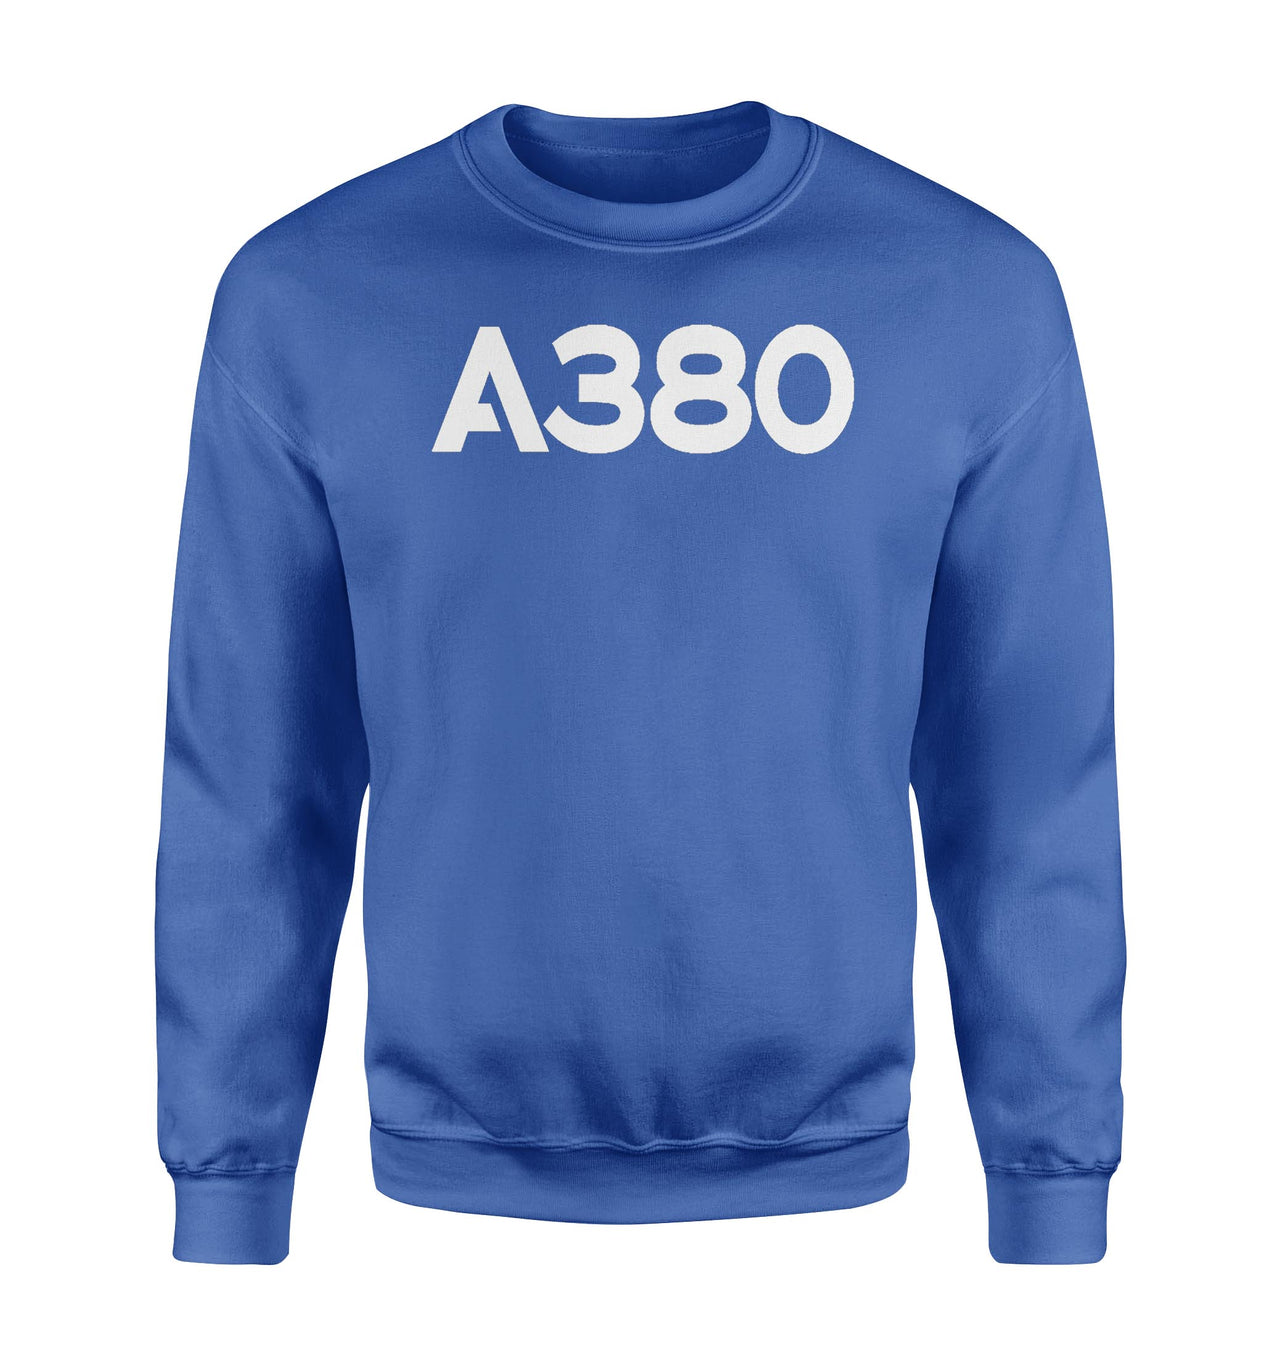 A380 Flat Text Designed Sweatshirts